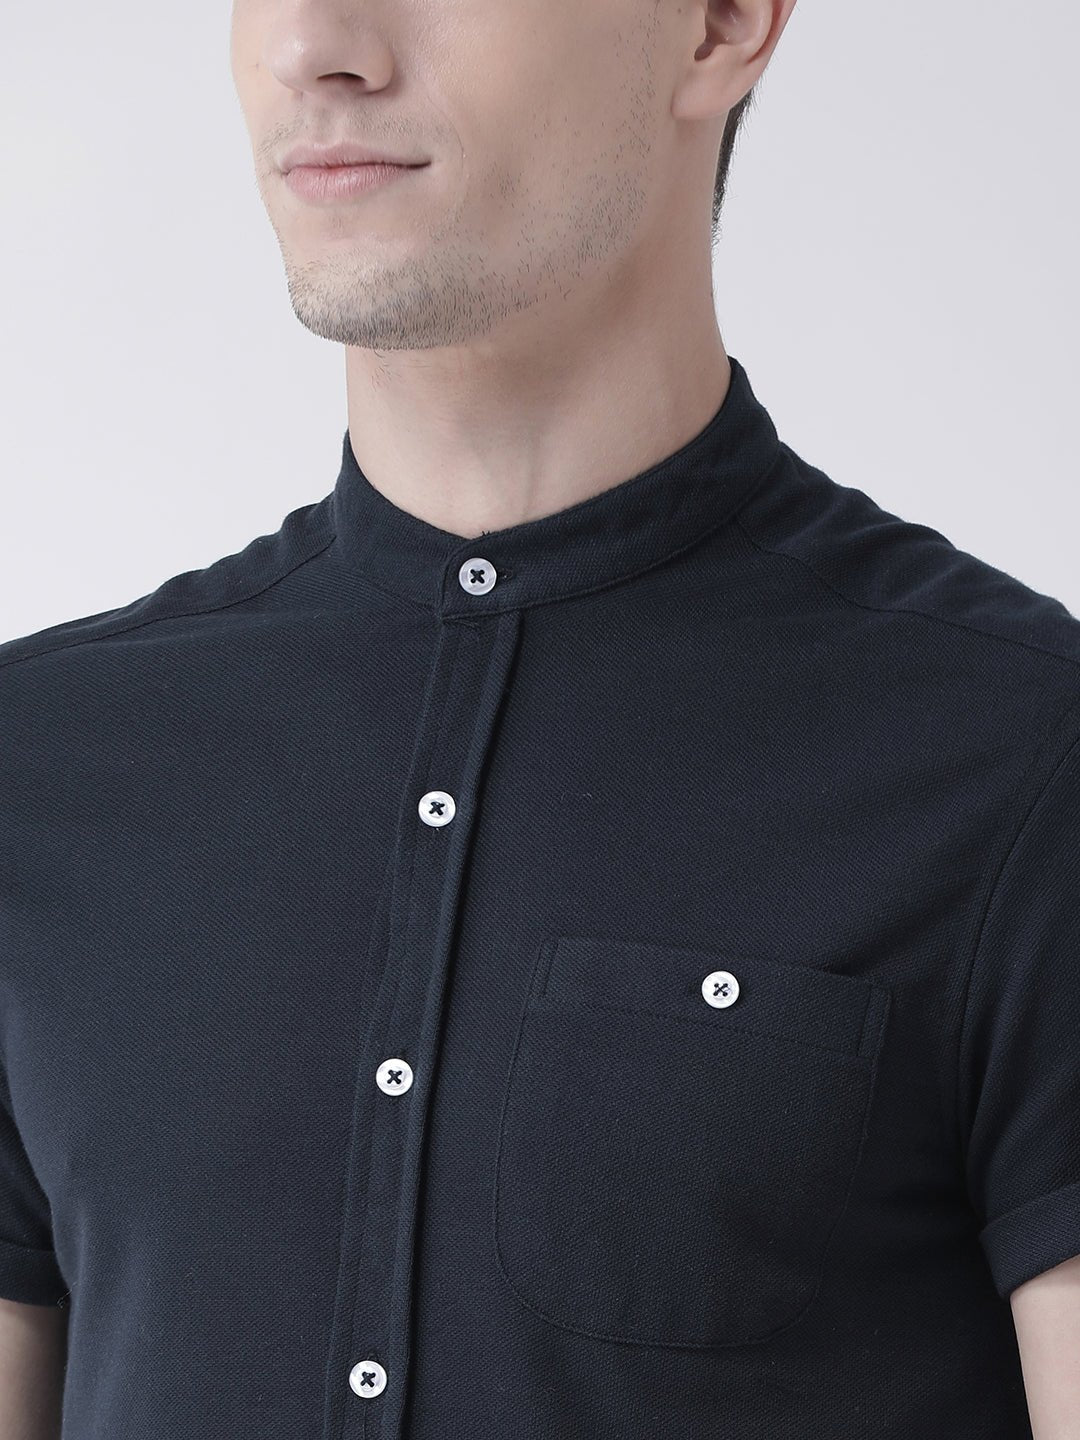 Black Knitted Shirt - clubyork